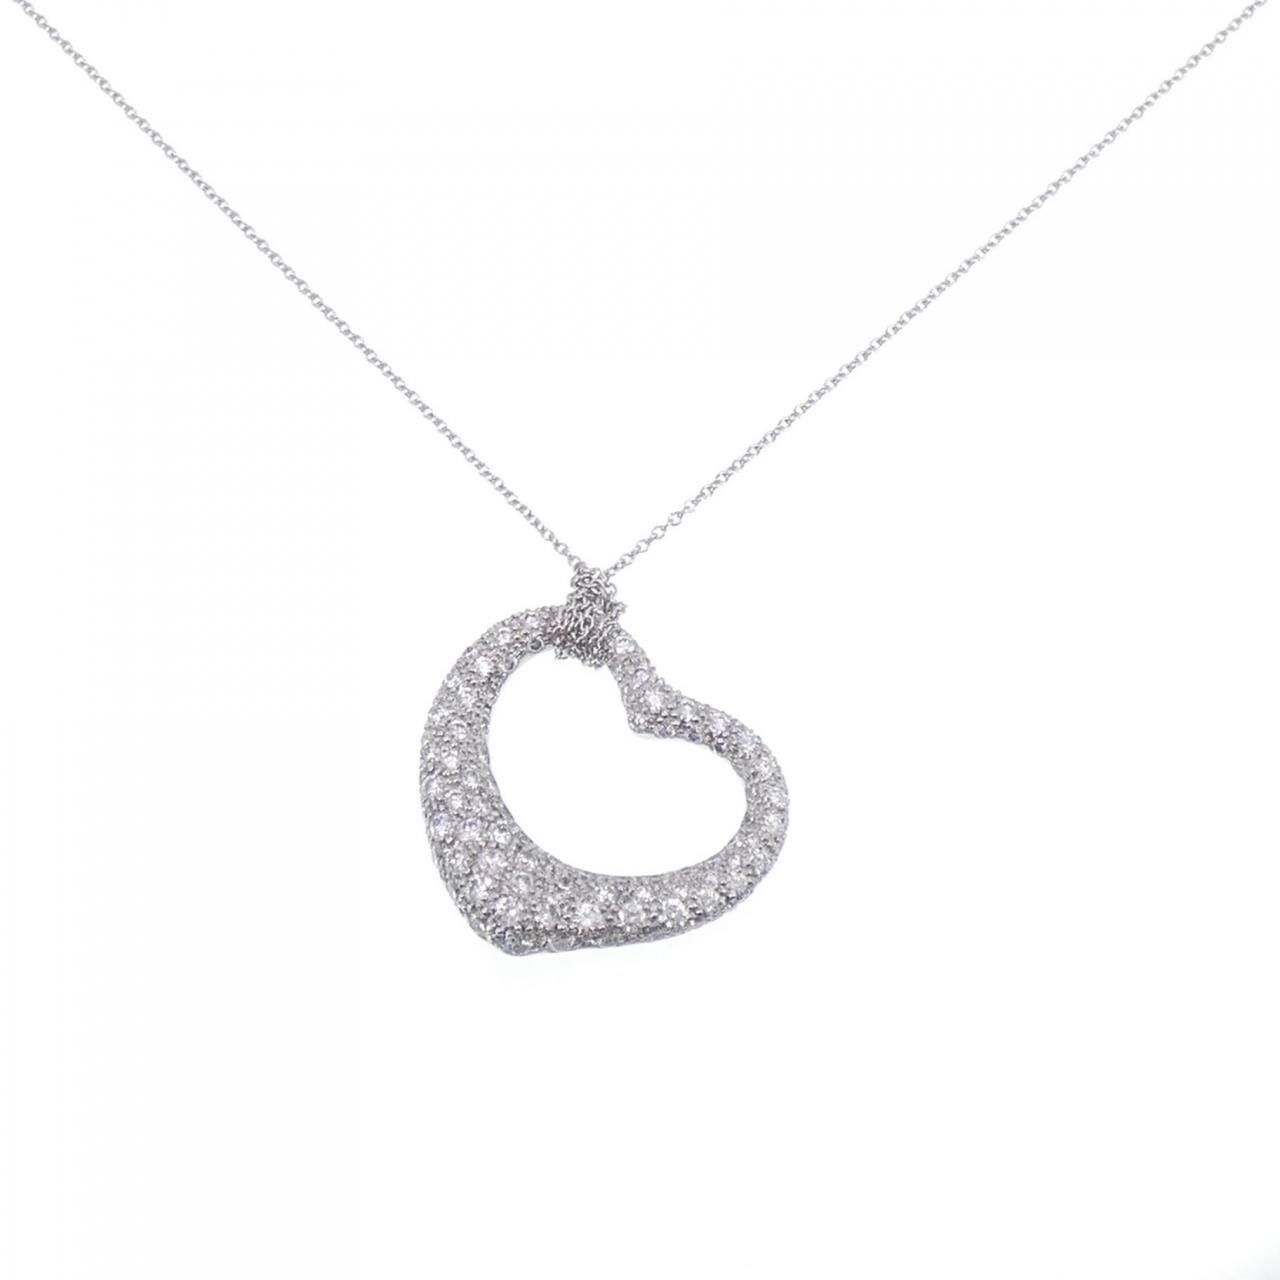 Tiffany & Co Silver Peretti 3 Open Heart Pendant Necklace Charm Chain Gift  Pouch